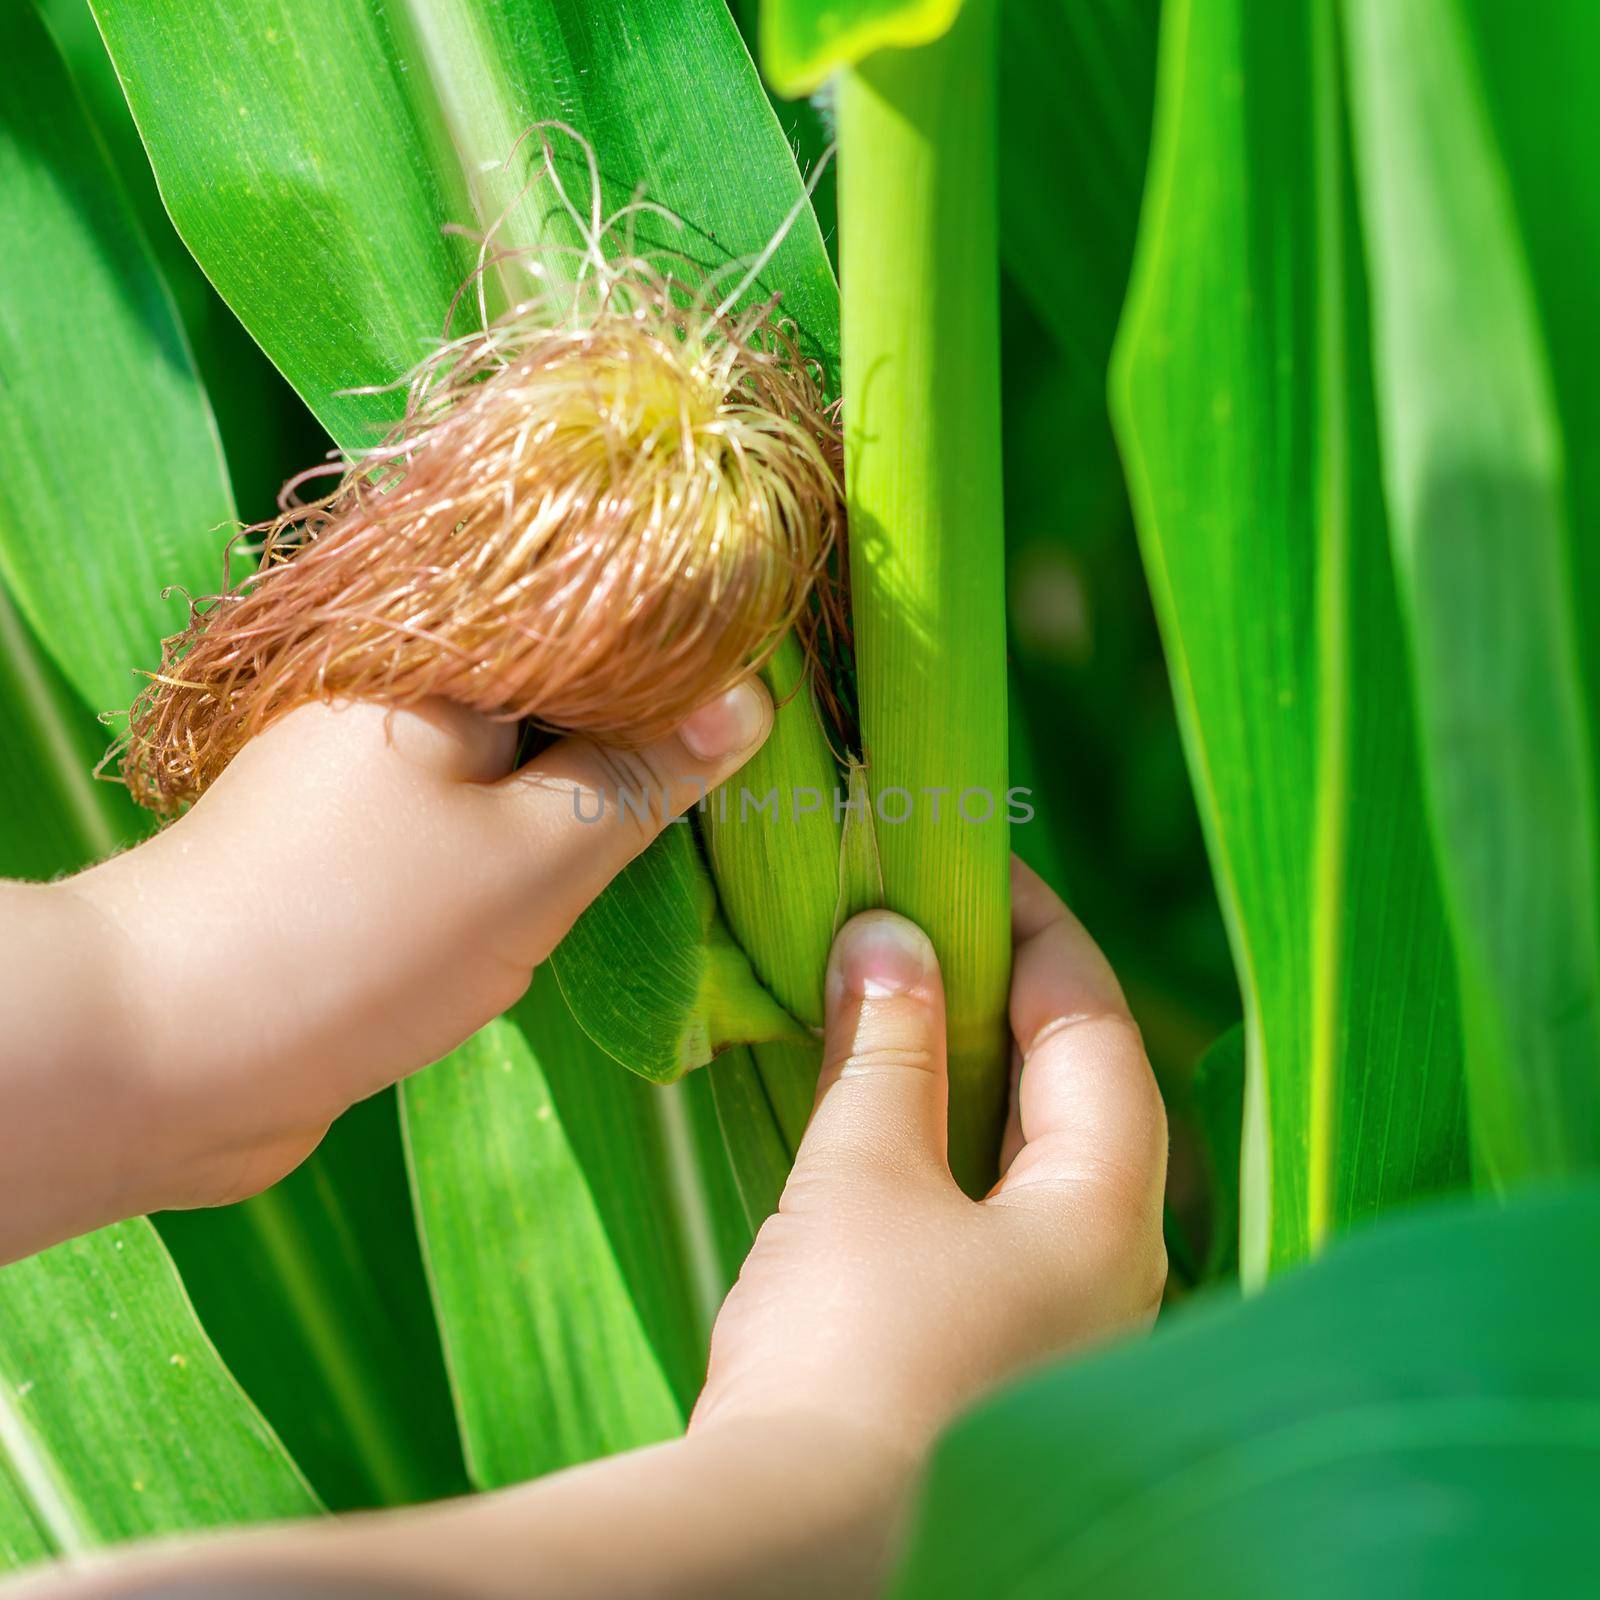 Cob of corn in hands of little child by okskukuruza